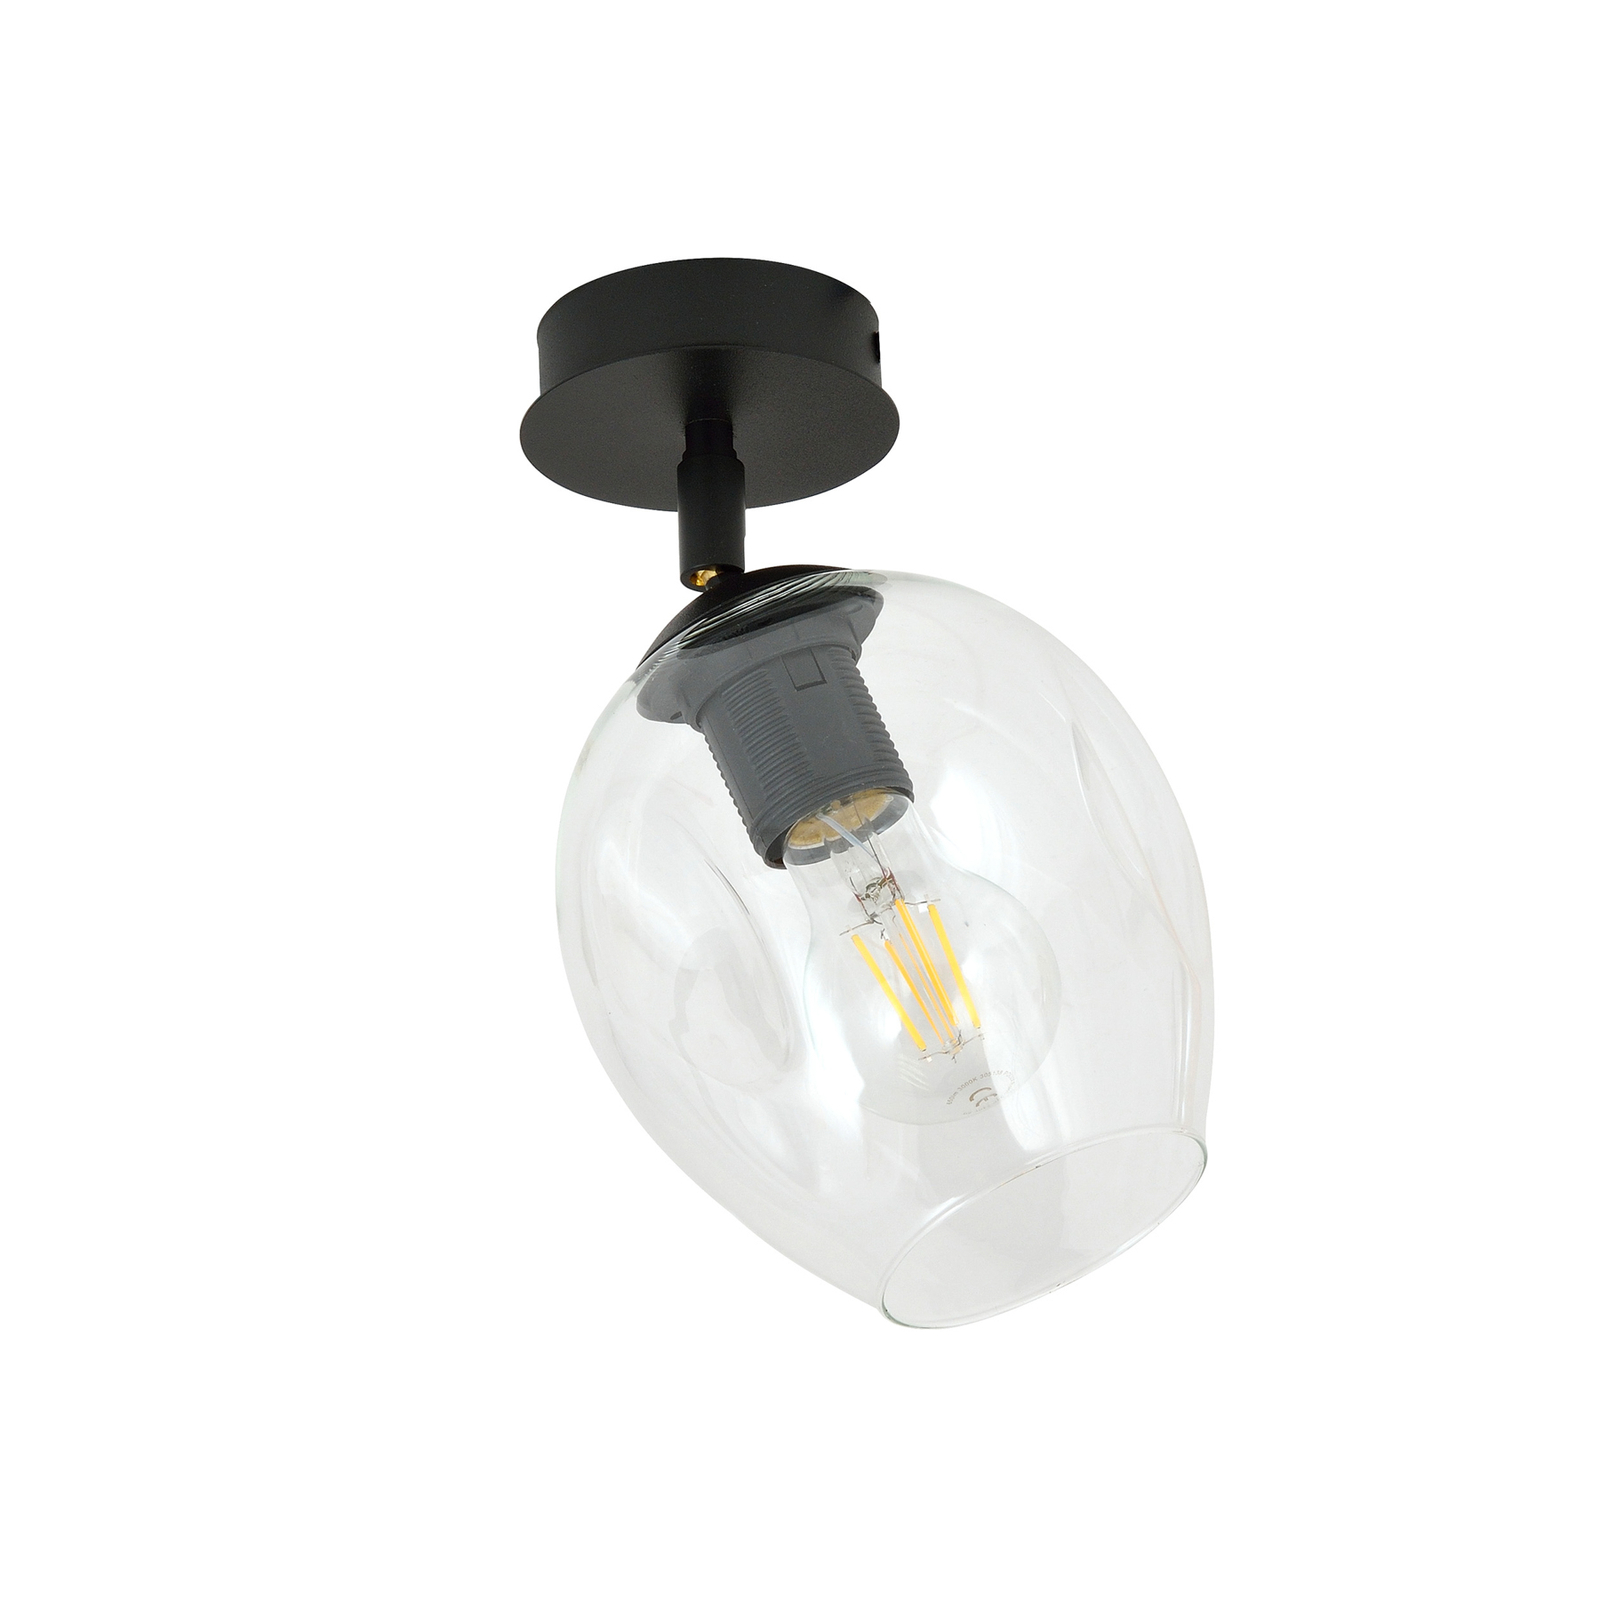 Flow 1 ceiling light one-bulb transparent